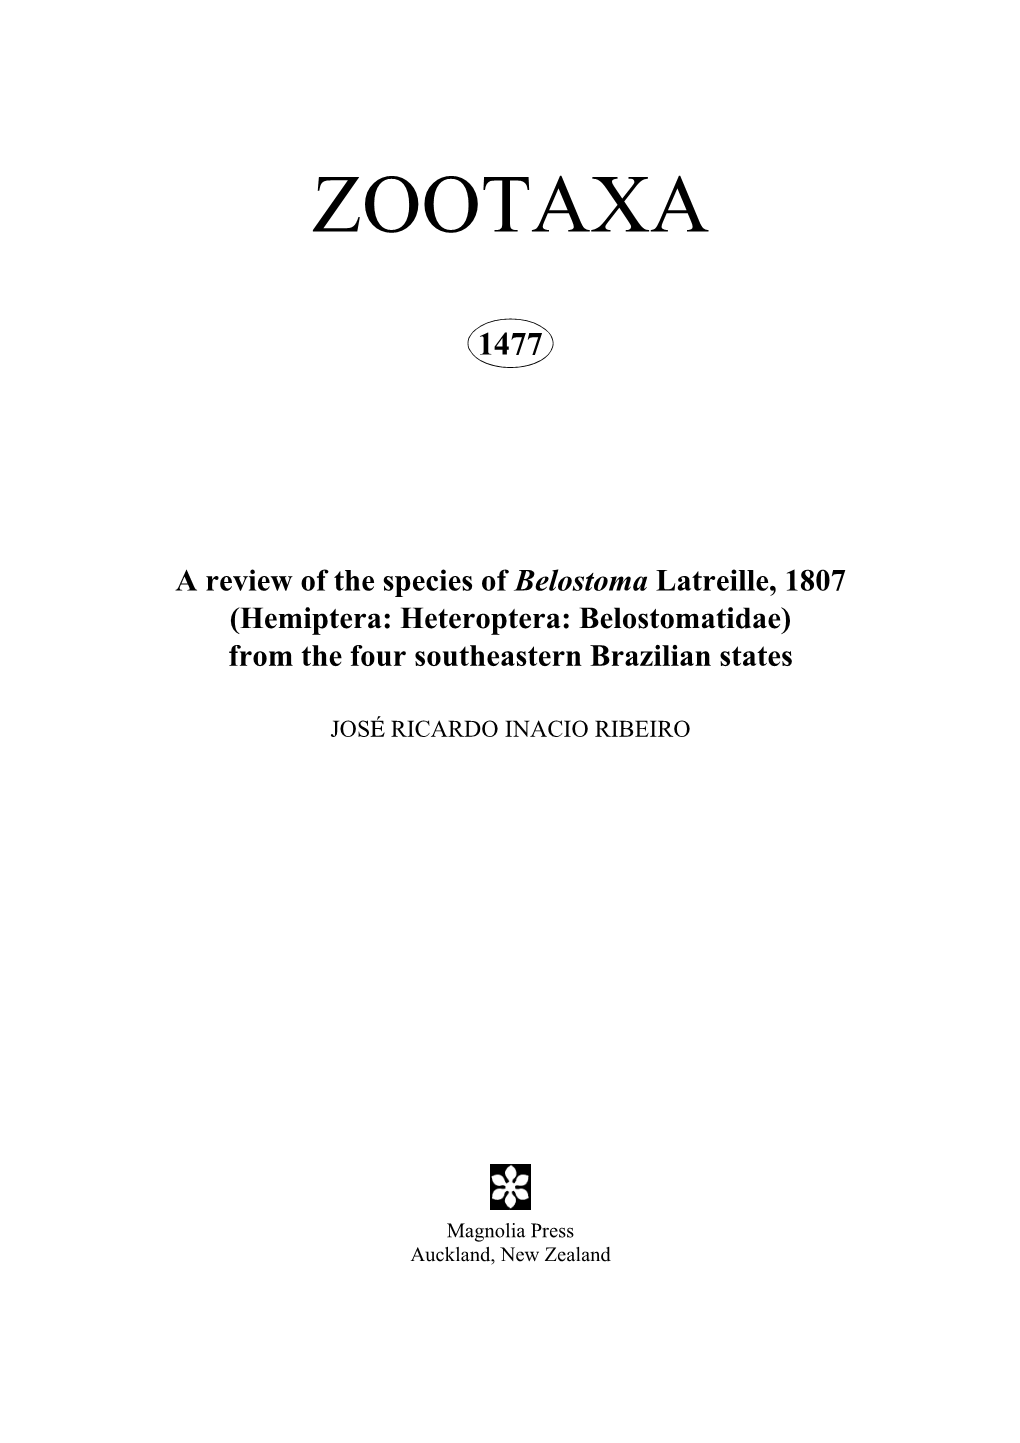 Zootaxa,A Review of the Species of Belostoma Latreille, 1807